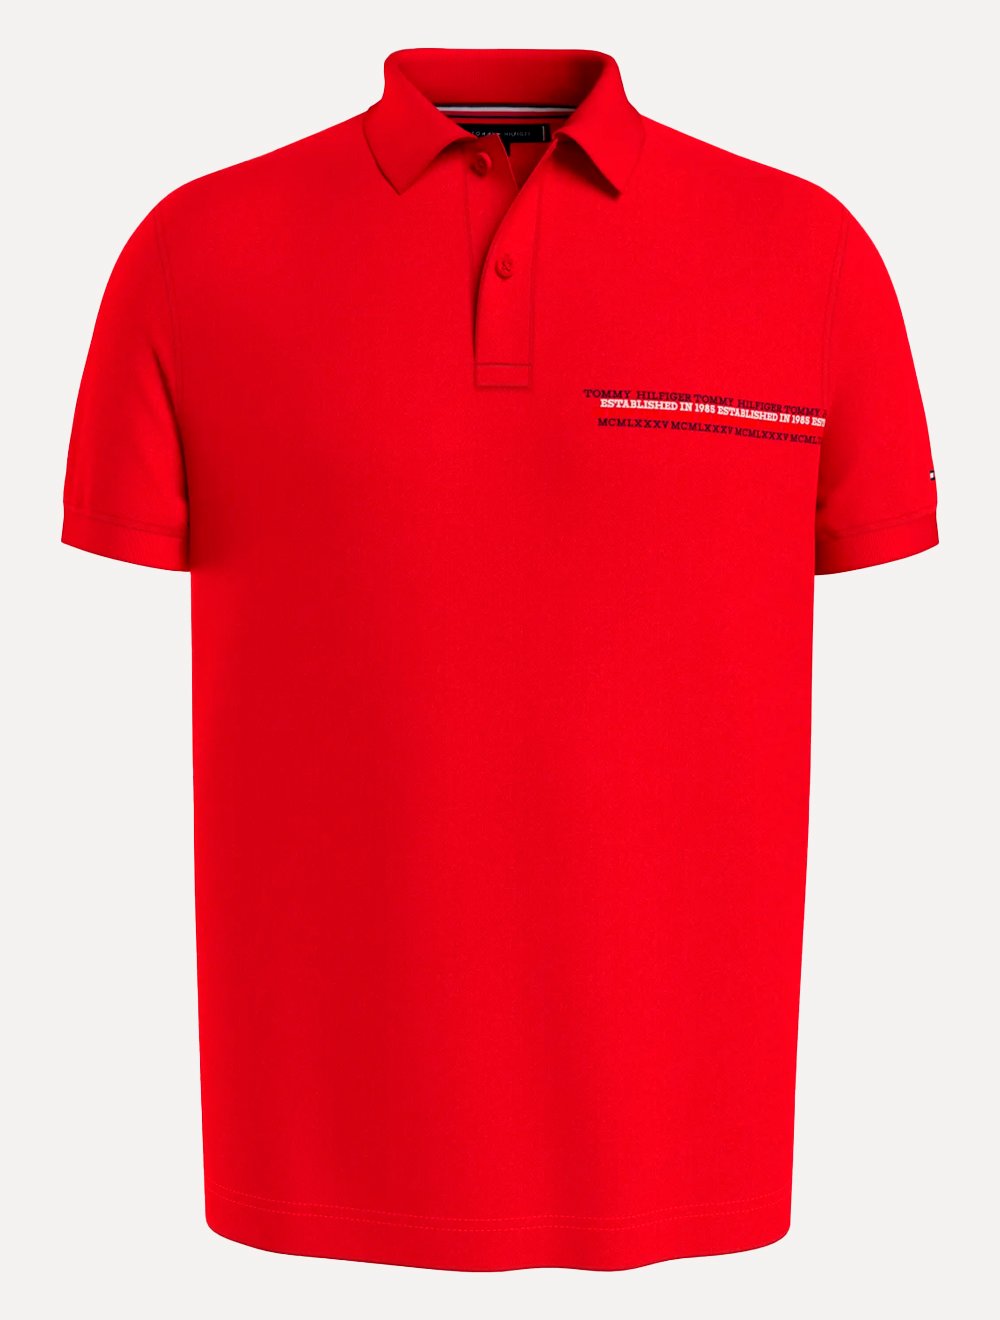 Camisa Polo Tommy Hilfiger IM 1985 Regular Season Masculina - Vermelho